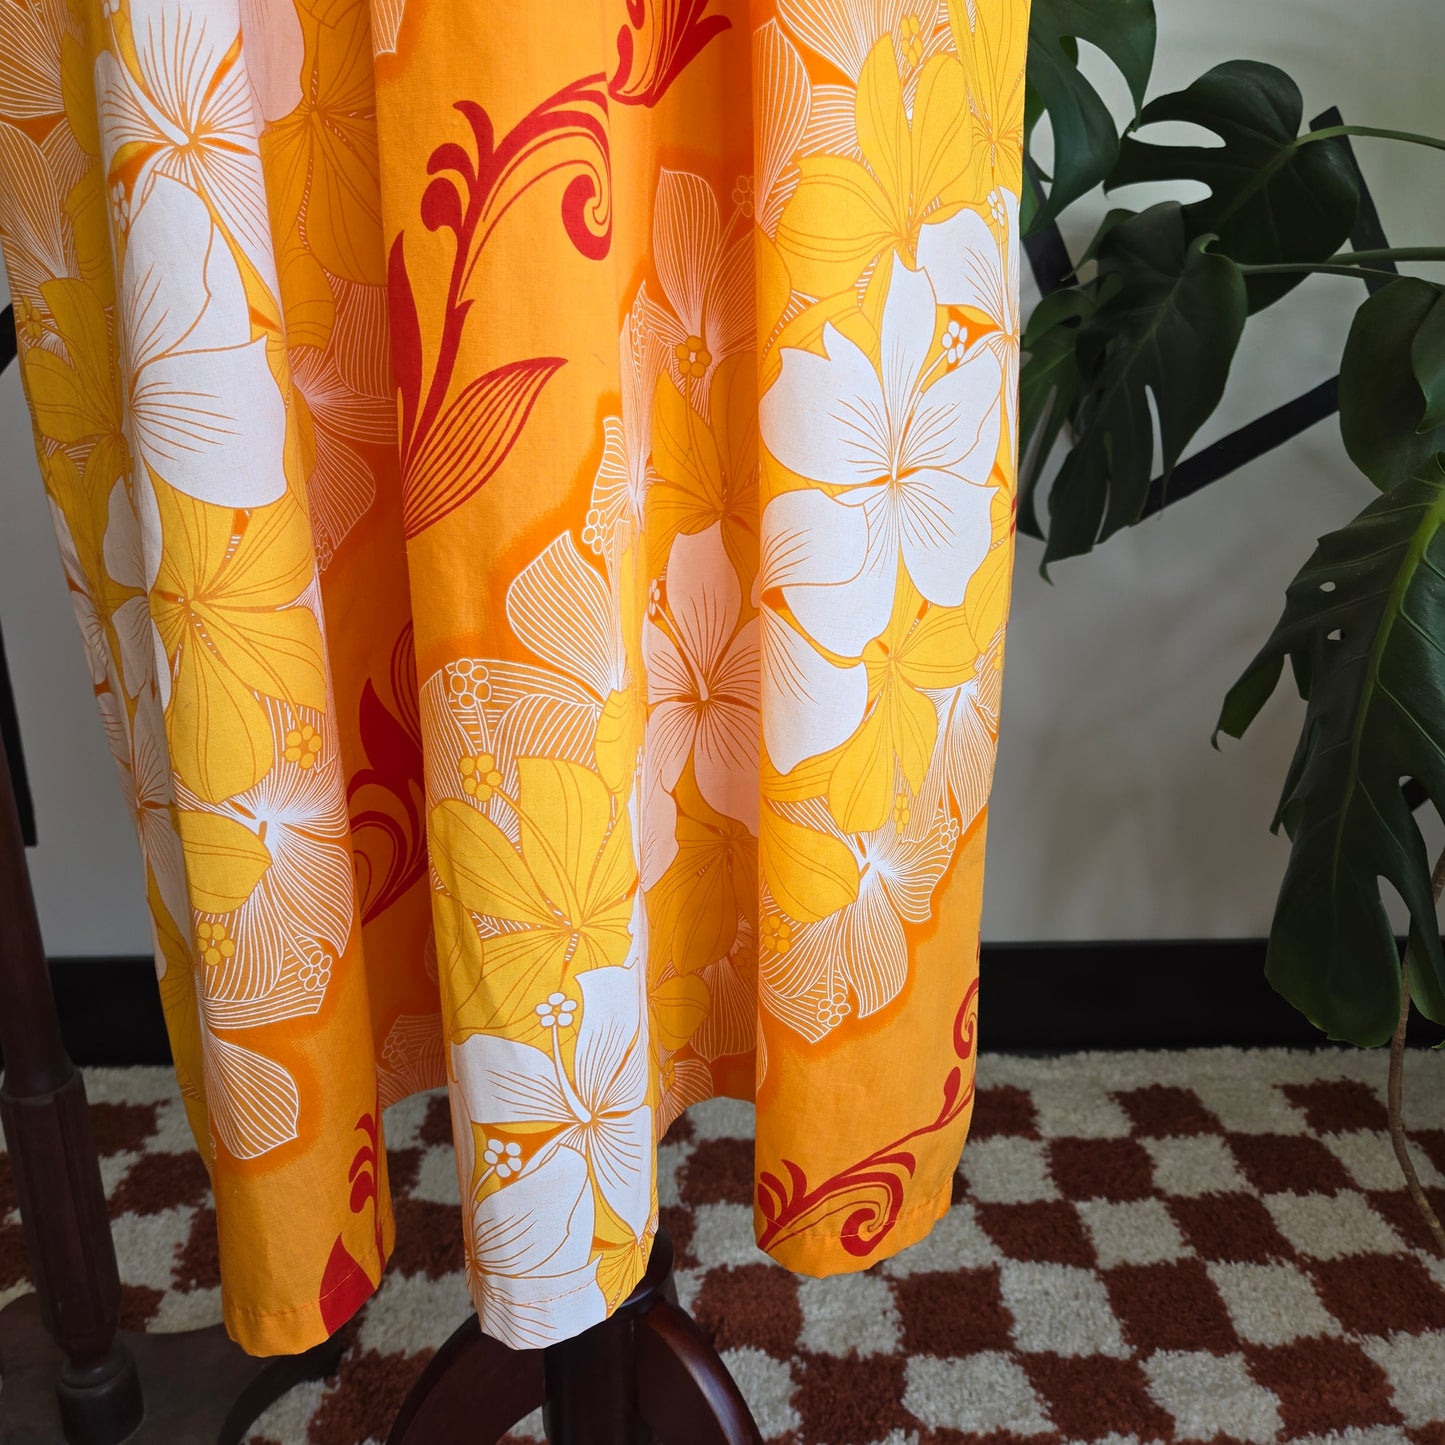 Hawaiian Reserve Collection Vintage Orange Floral Dress - 2X